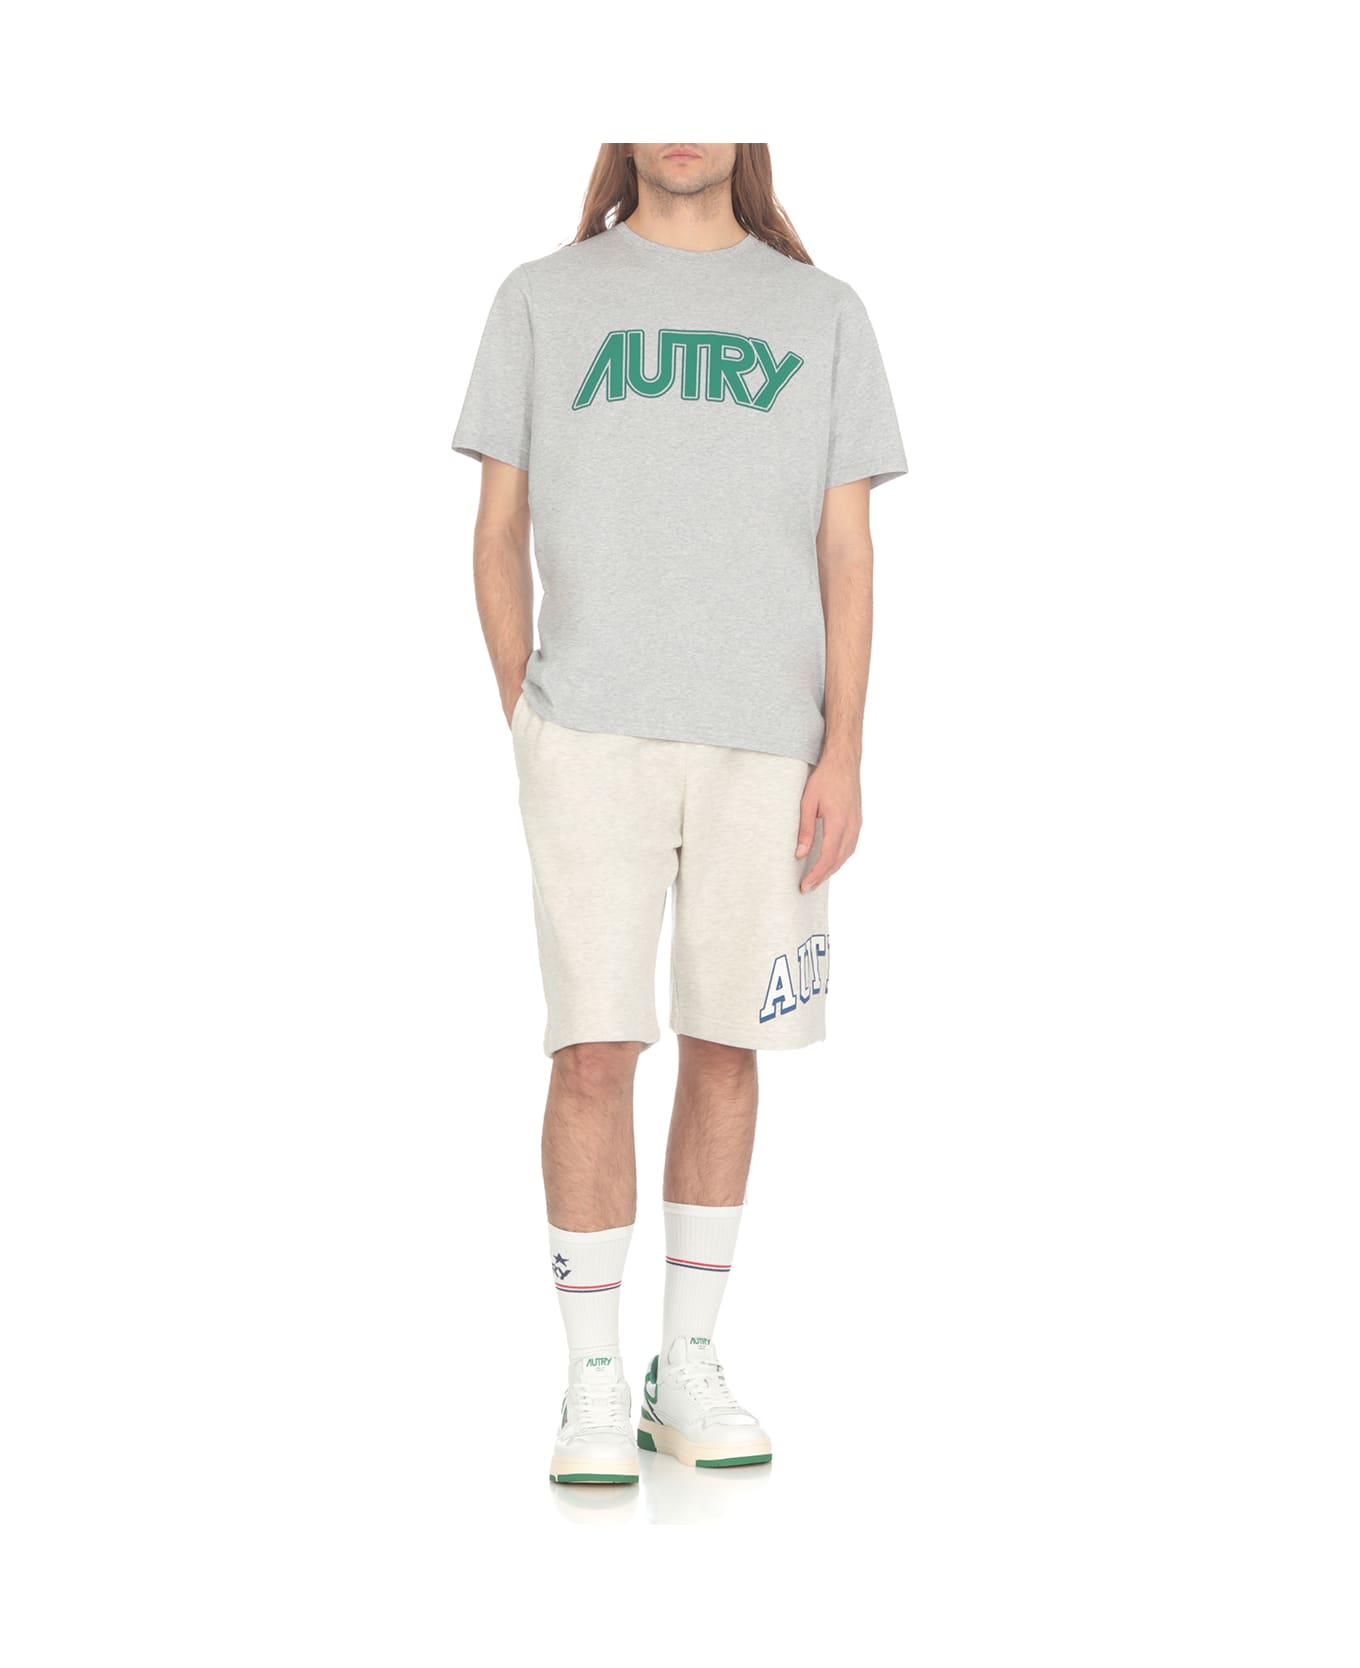 Autry Main T-shirt - Melange